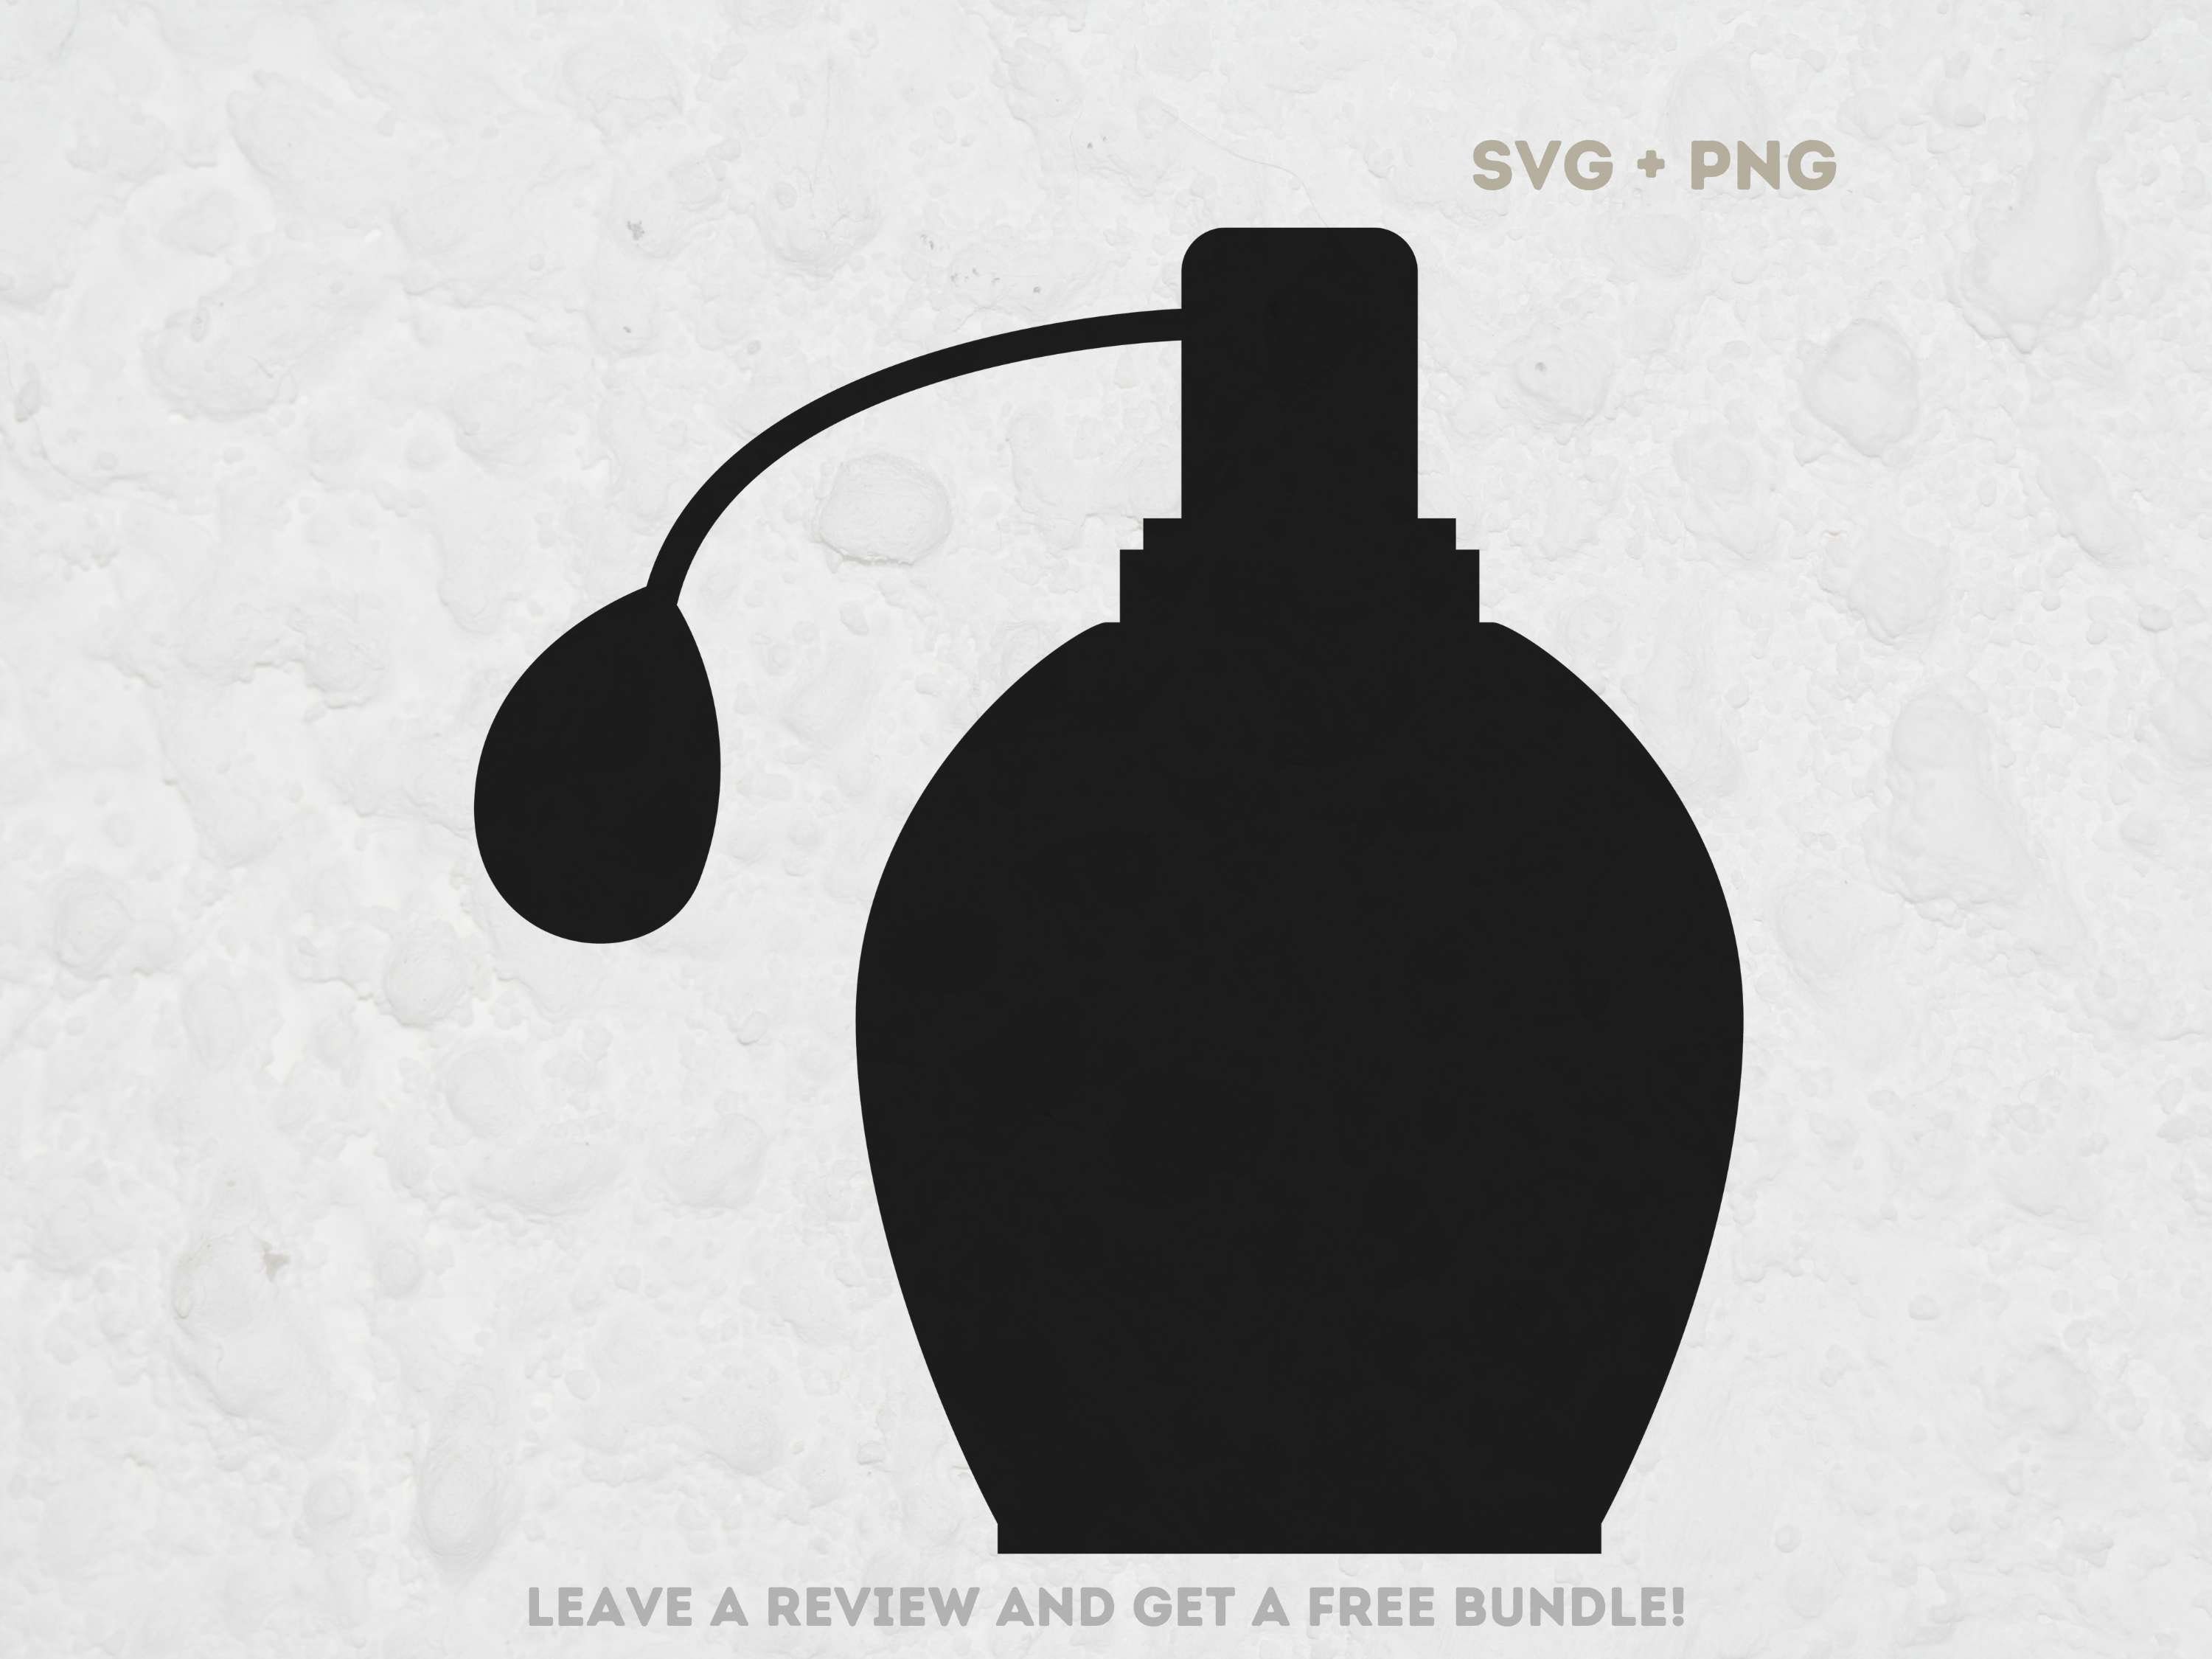 Estee Lauder Logo PNG Transparent & SVG Vector - Freebie Supply